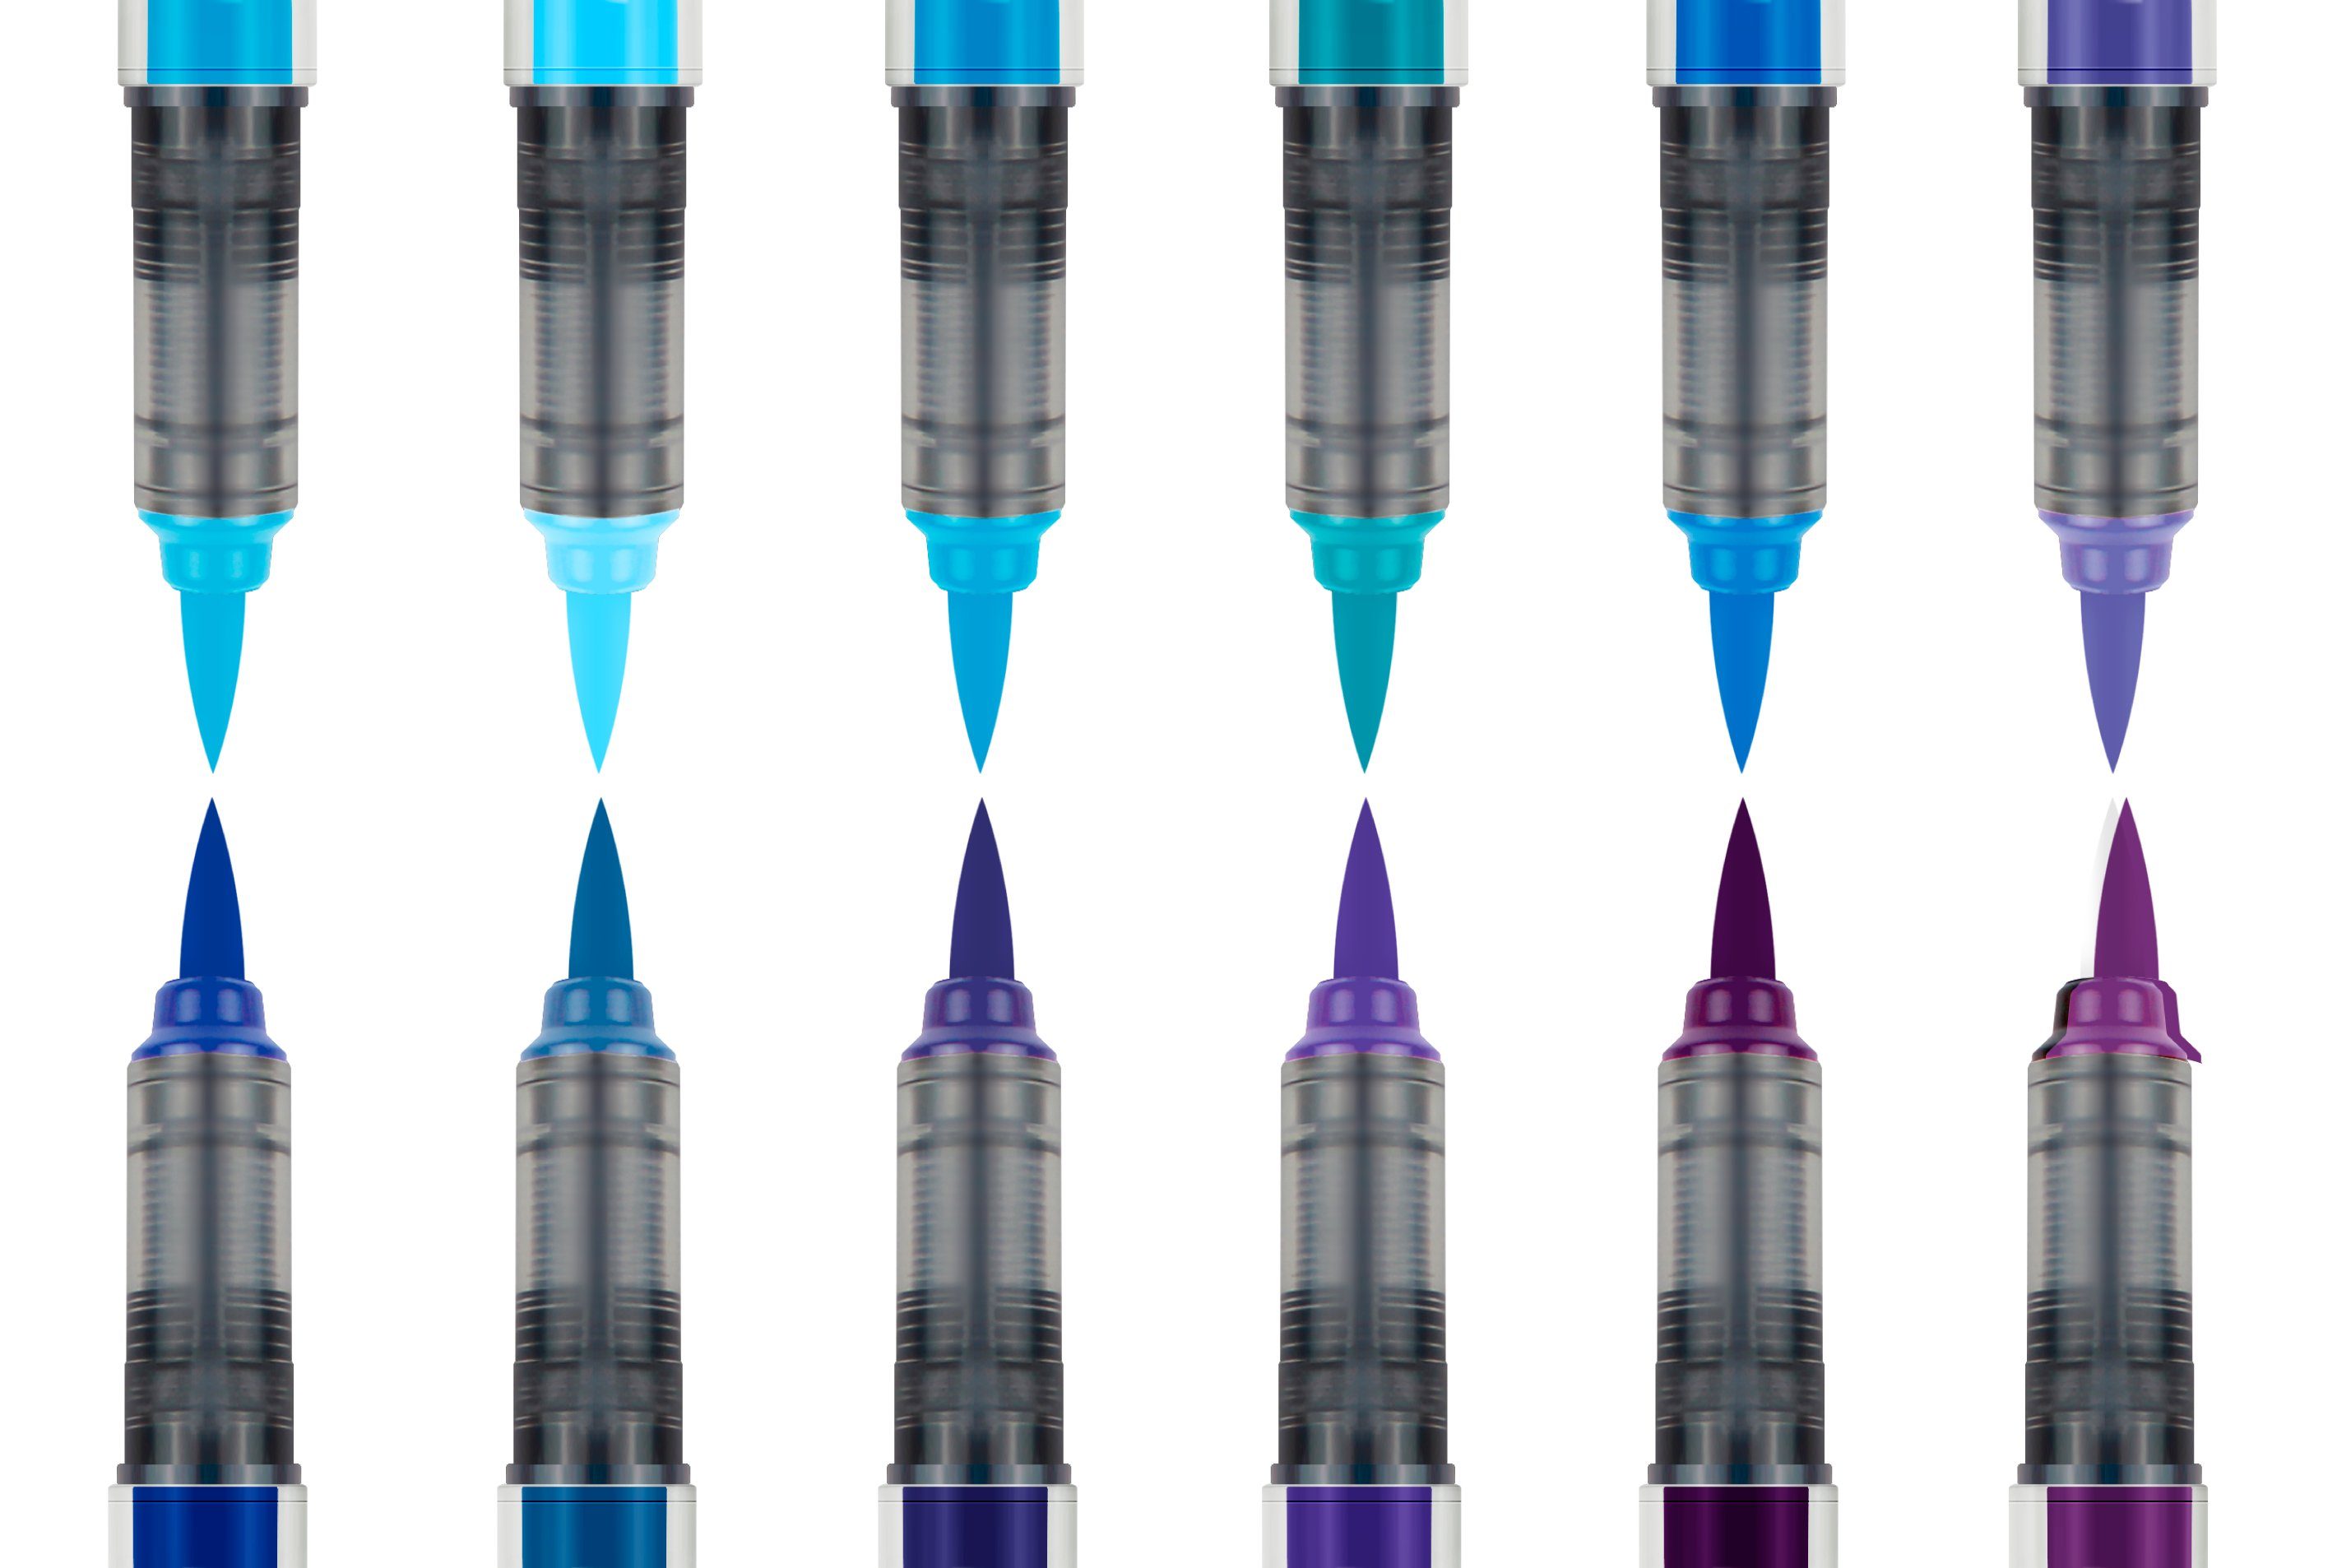 Farben PRO karin Pinselstift Blau 12 Brushmarker Set,